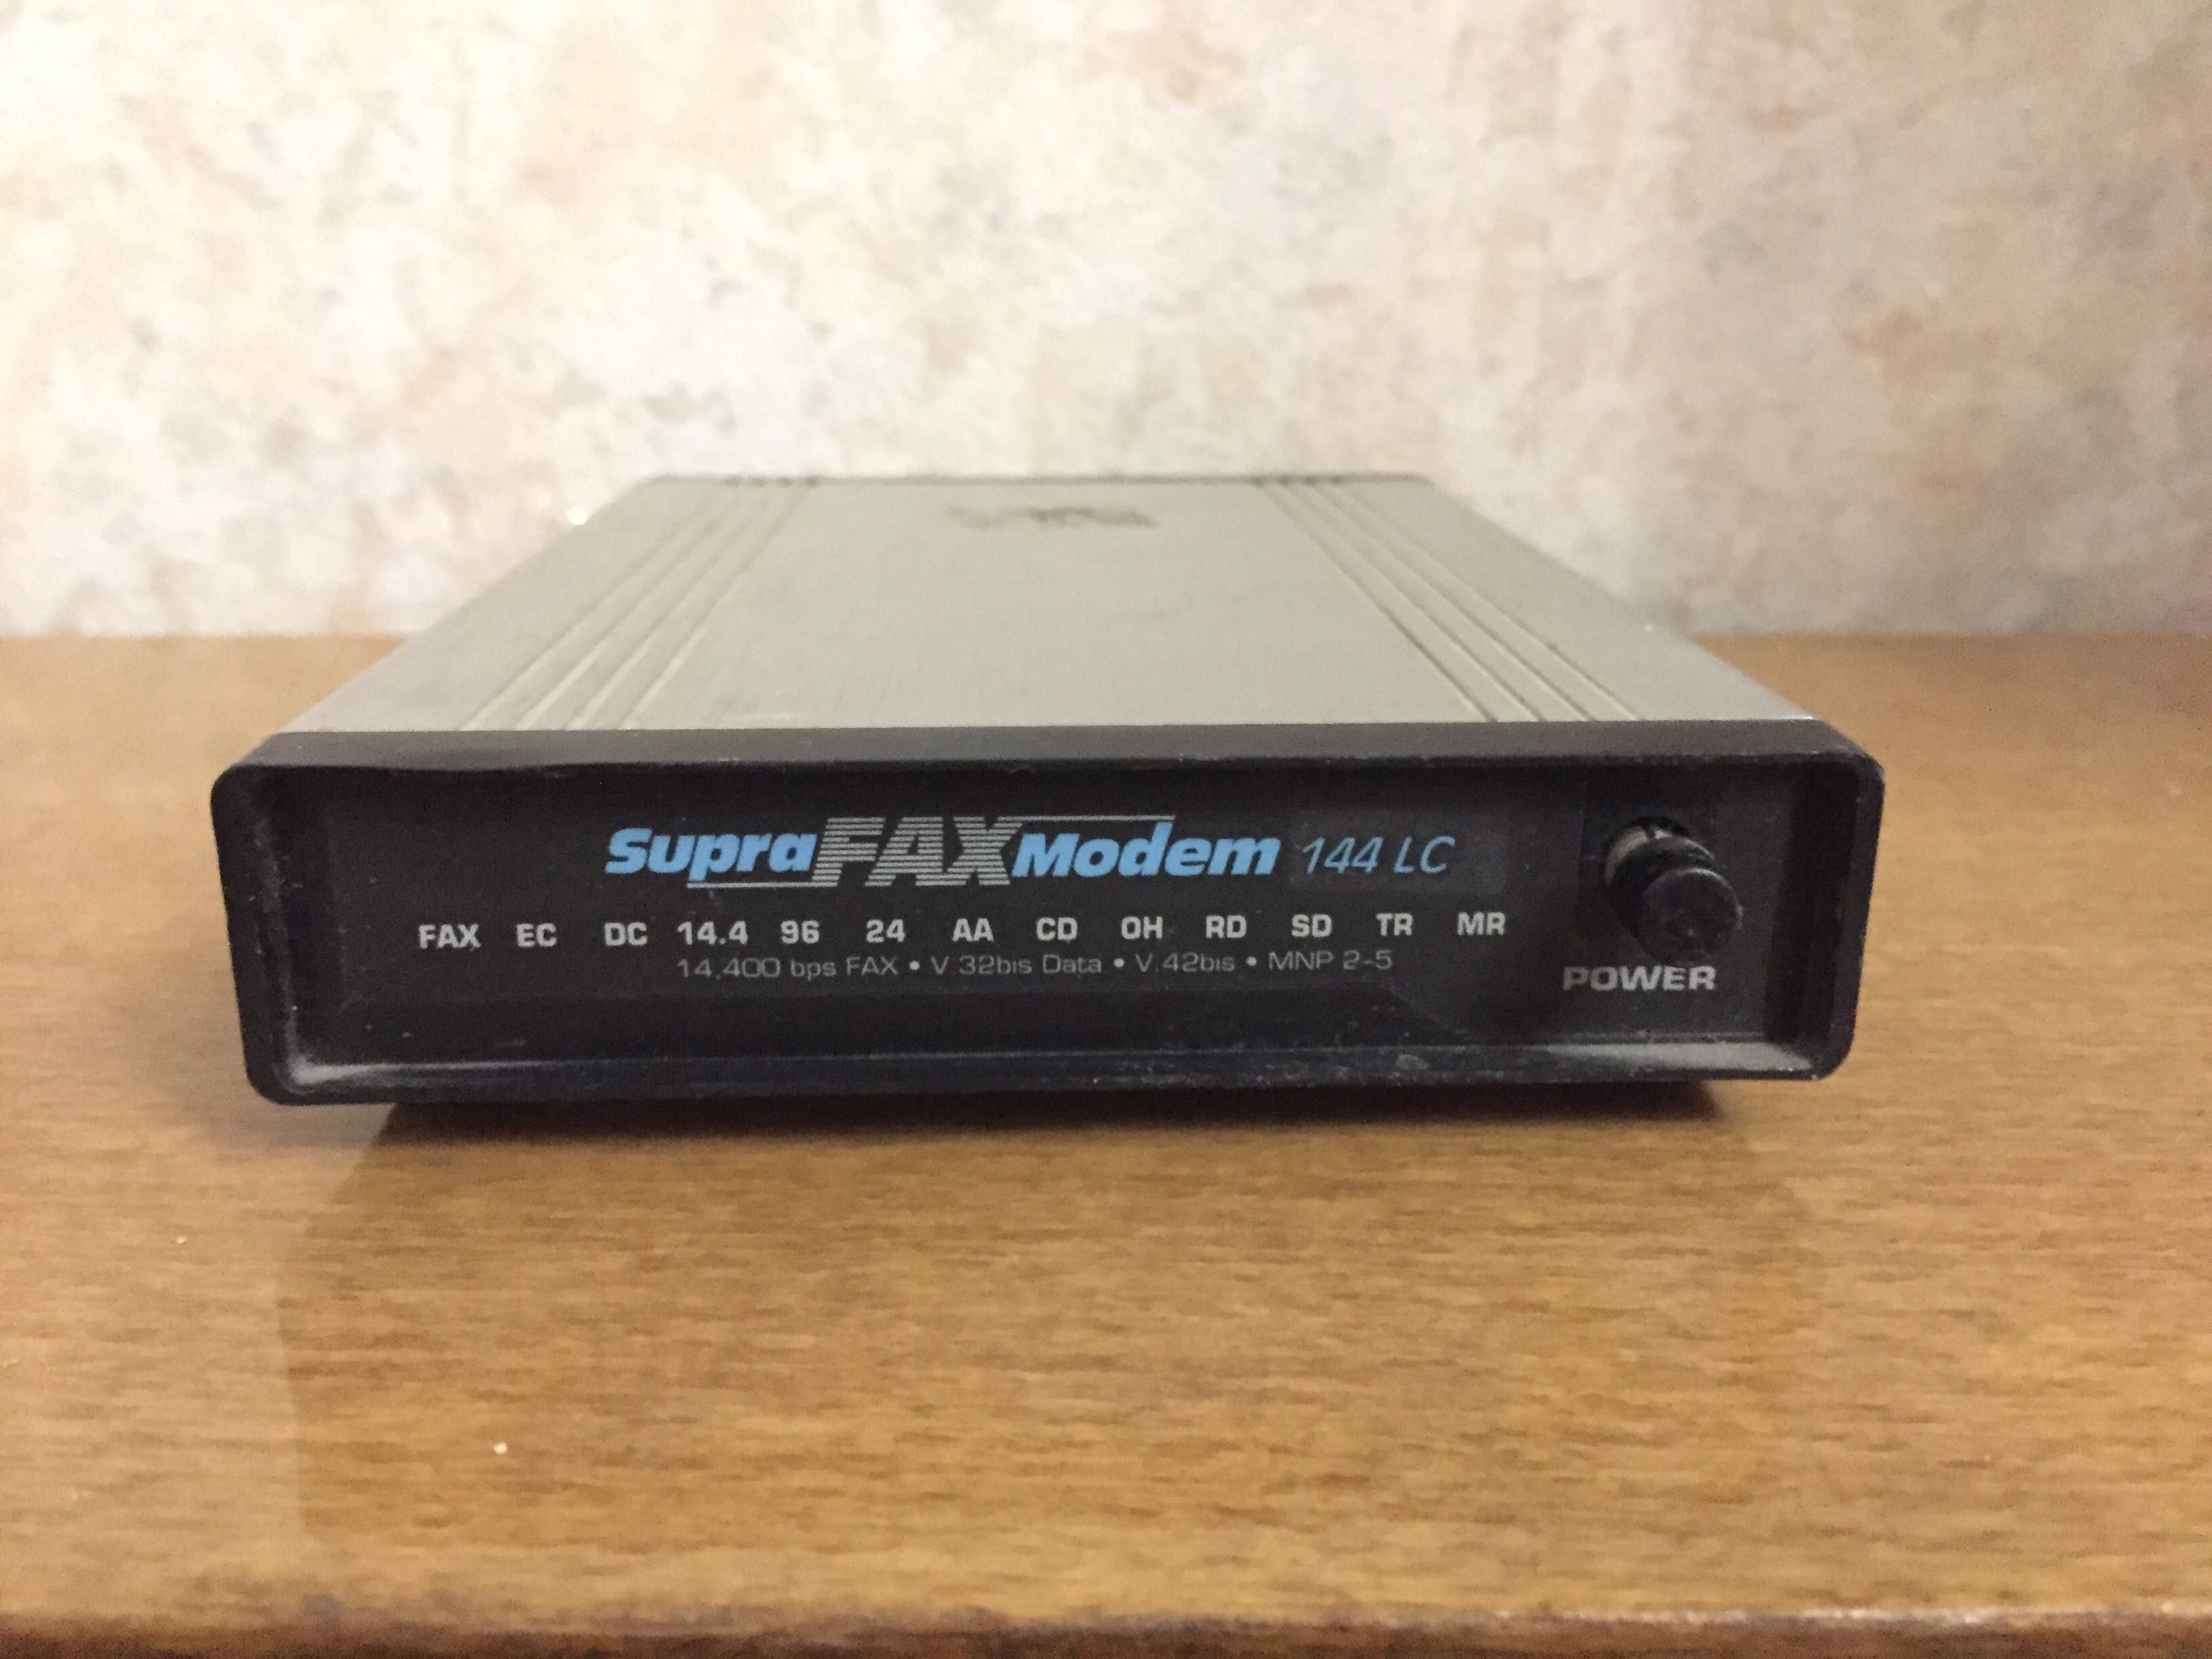 Supra fax modem 144 LC